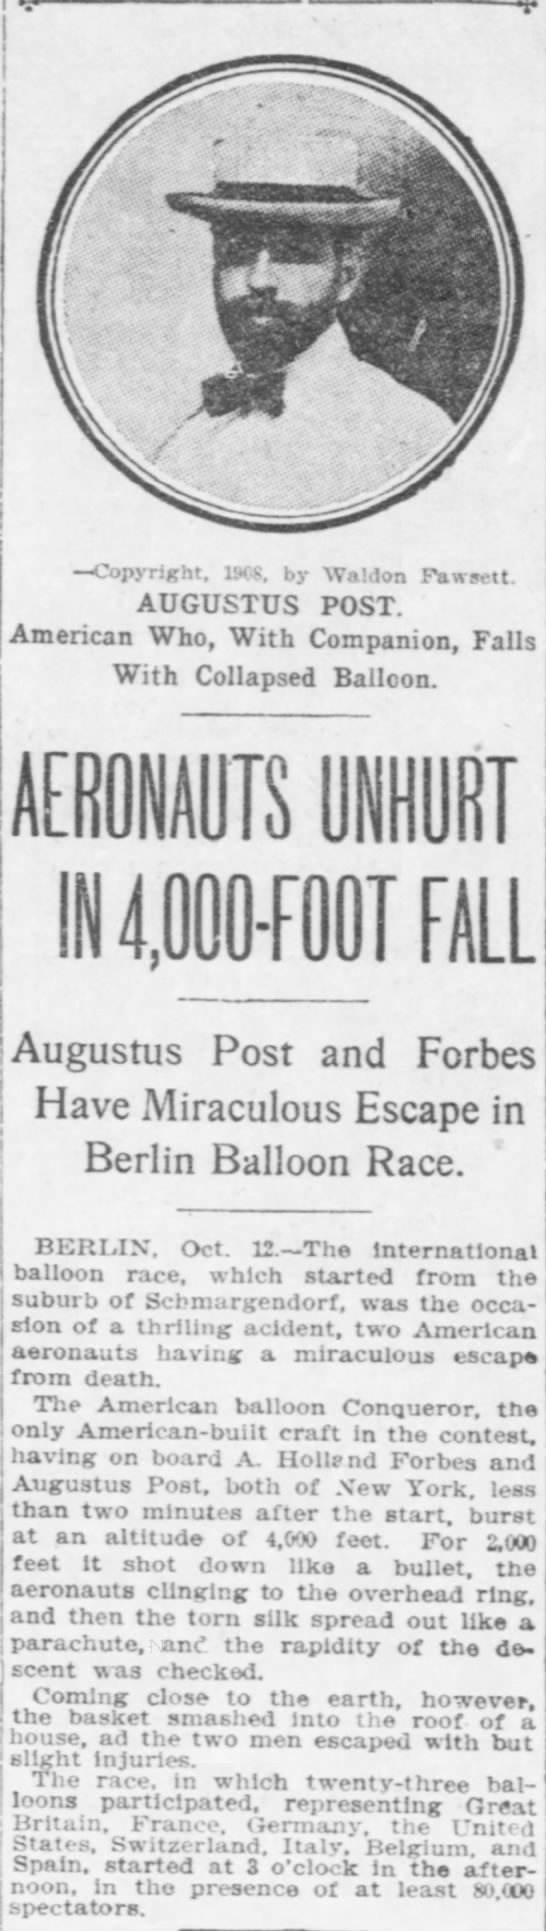 Aeronauts Unhurt in 4,000 Foot Fall - 